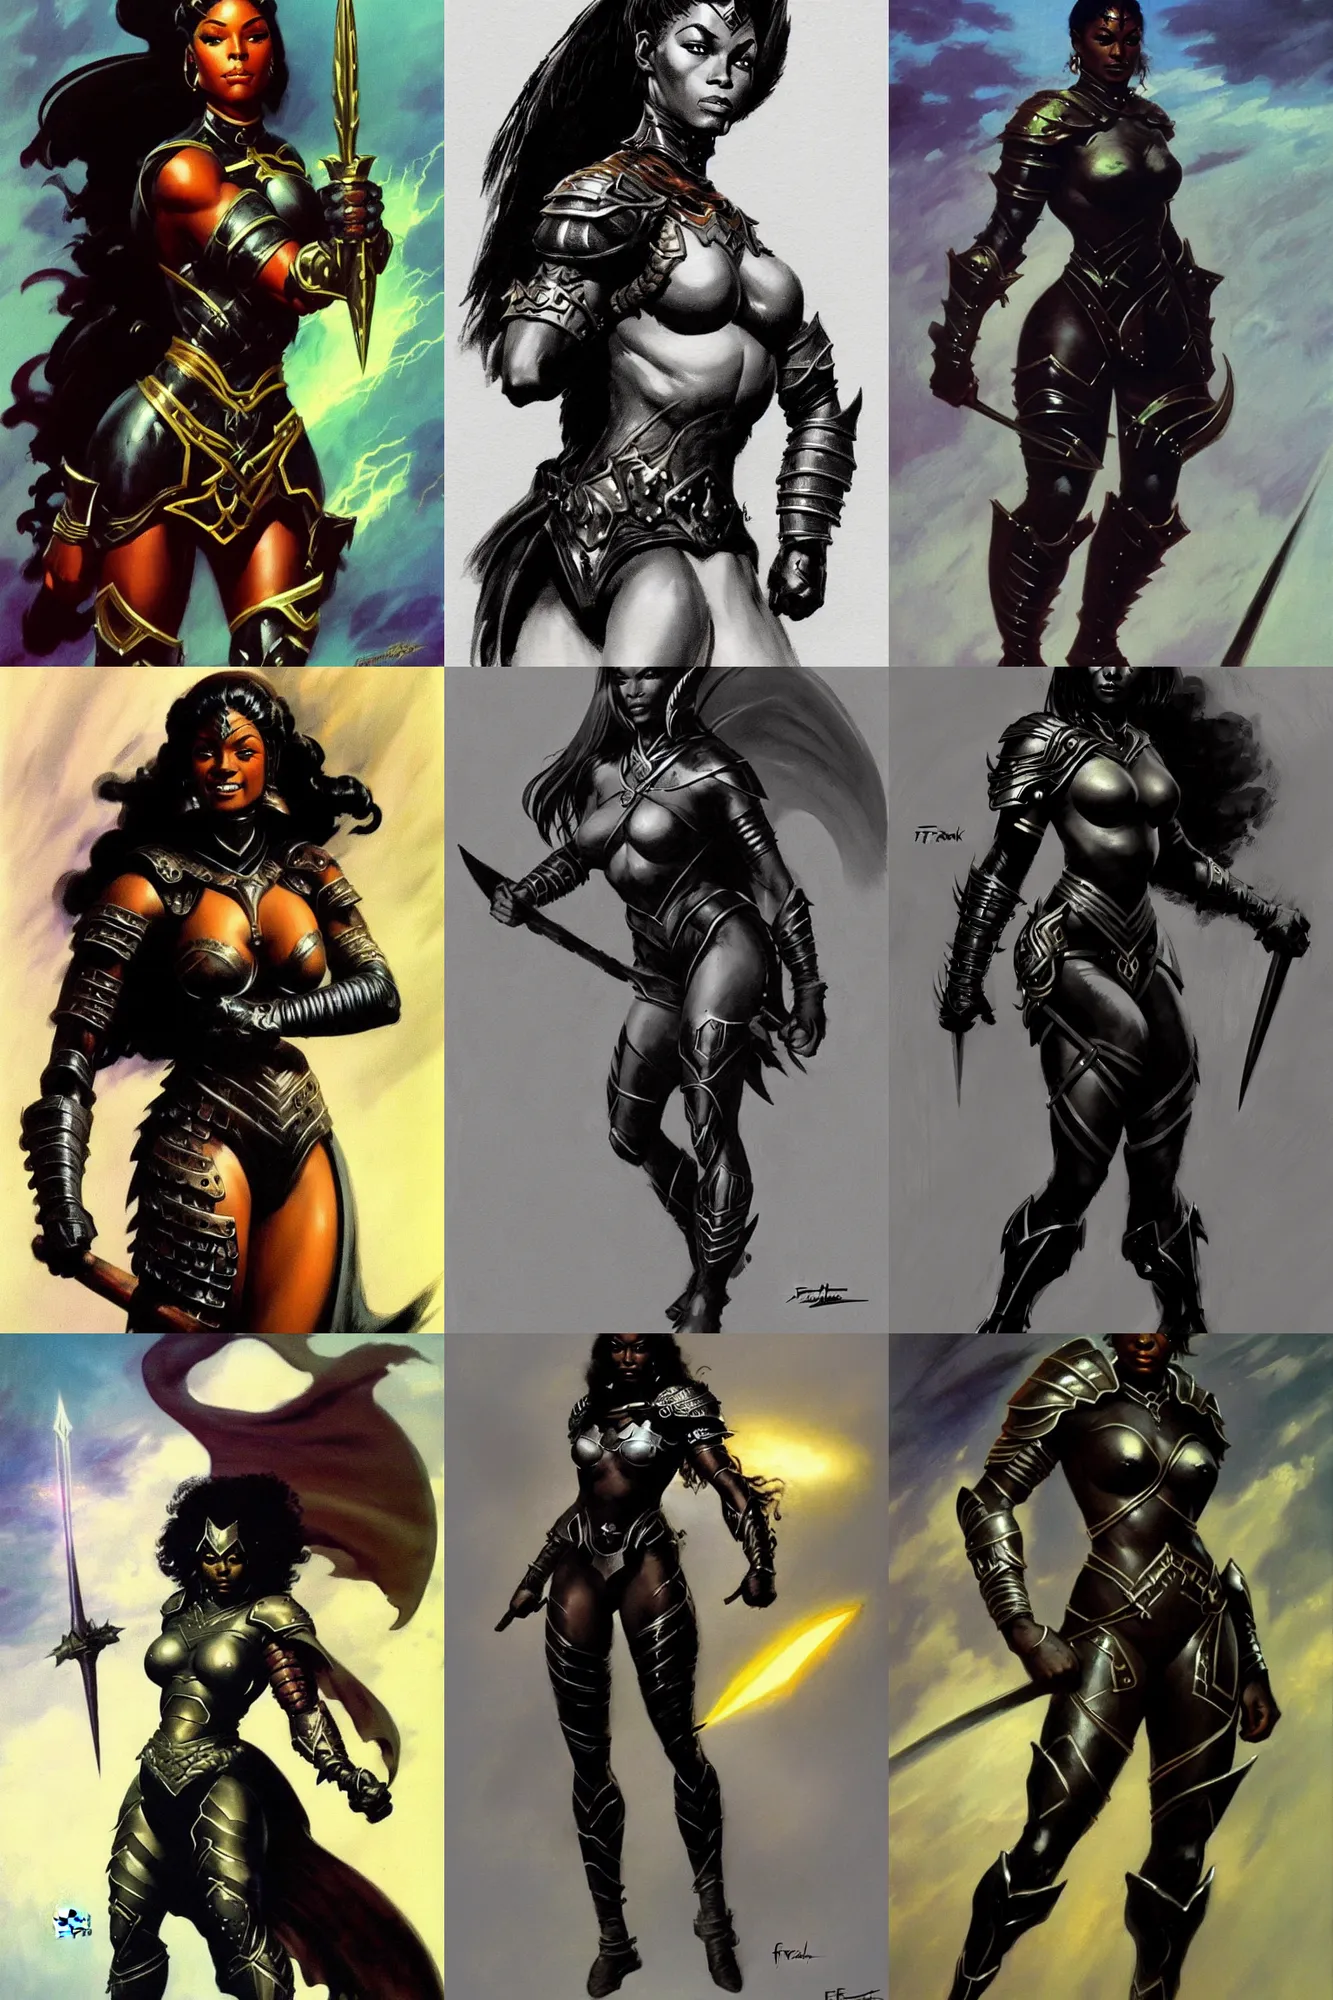 Prompt: high fantasy black female wearing spandex armour portrait by Frank frazetta full body profile, trending on artstation, dramatic lightning